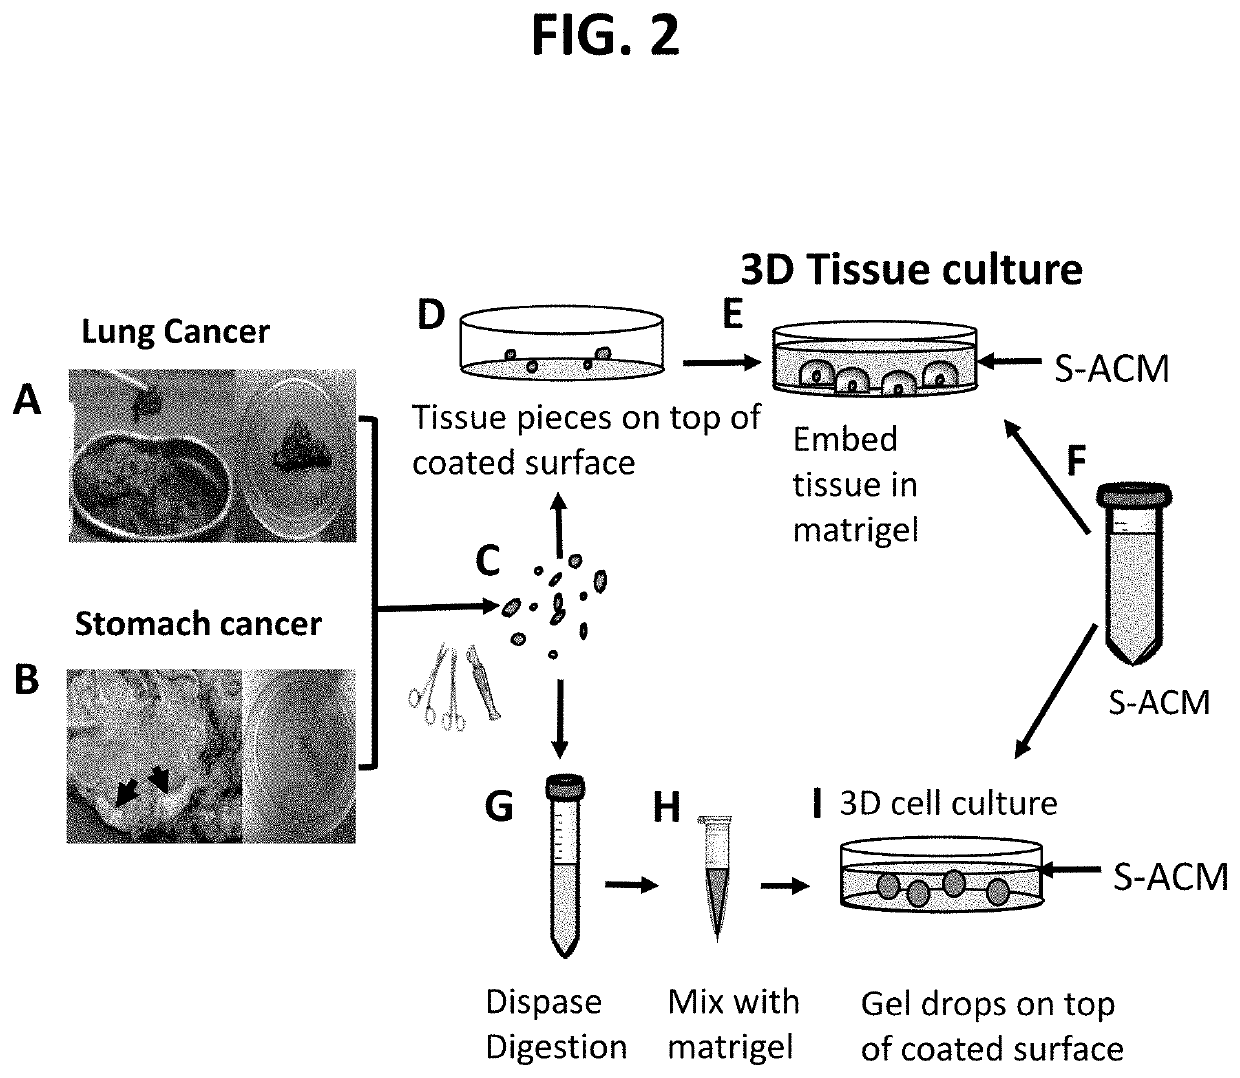 Methods of primary tissue culture and drug screening using autologous serum and fluids